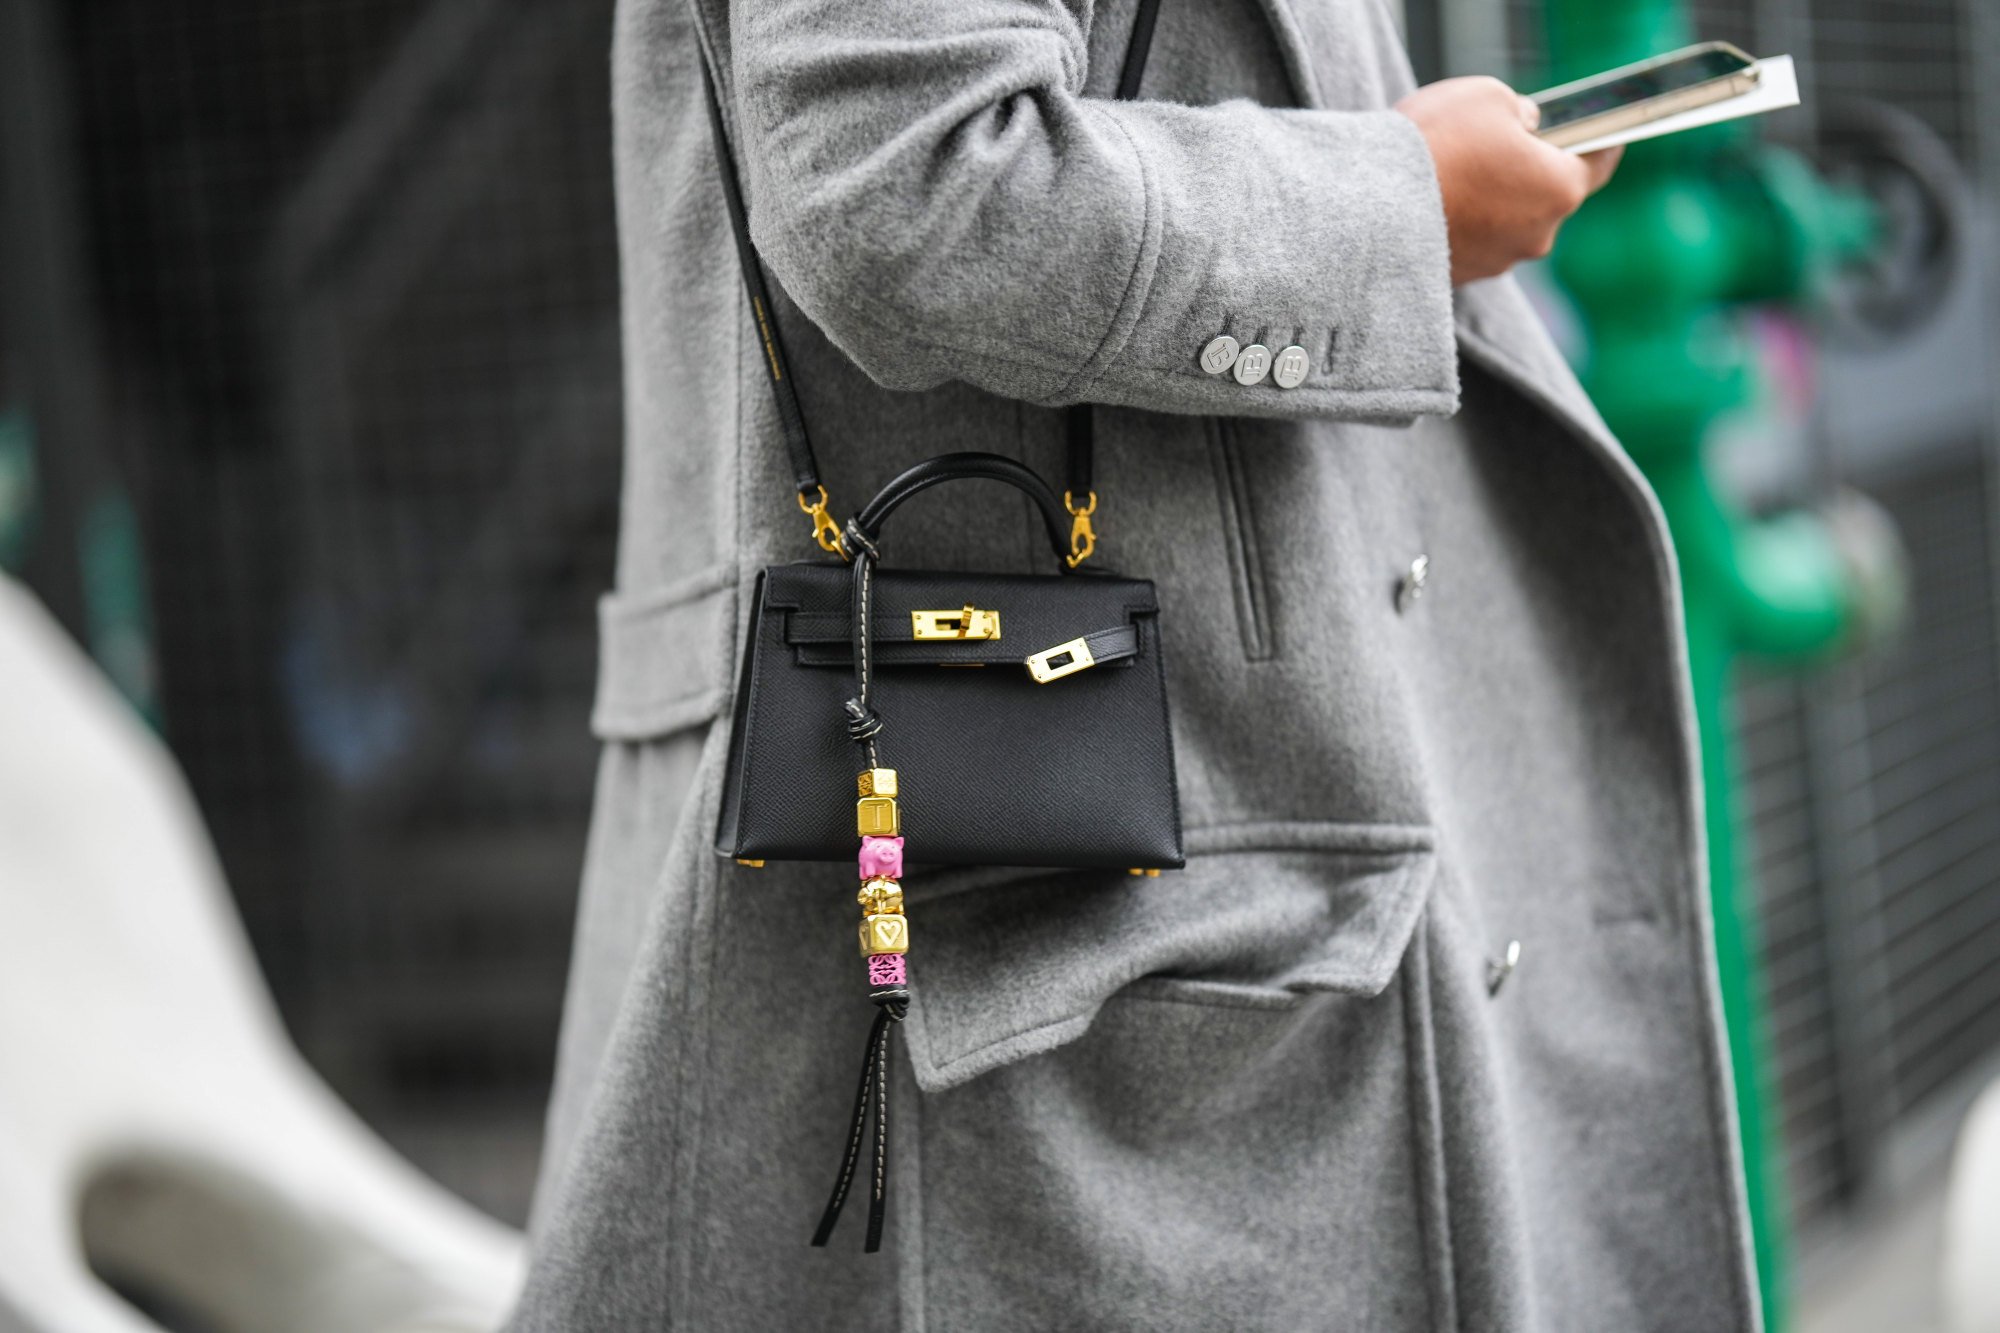 Iconic Hermès, Gucci and Fendi luxury handbags join Hong Kong